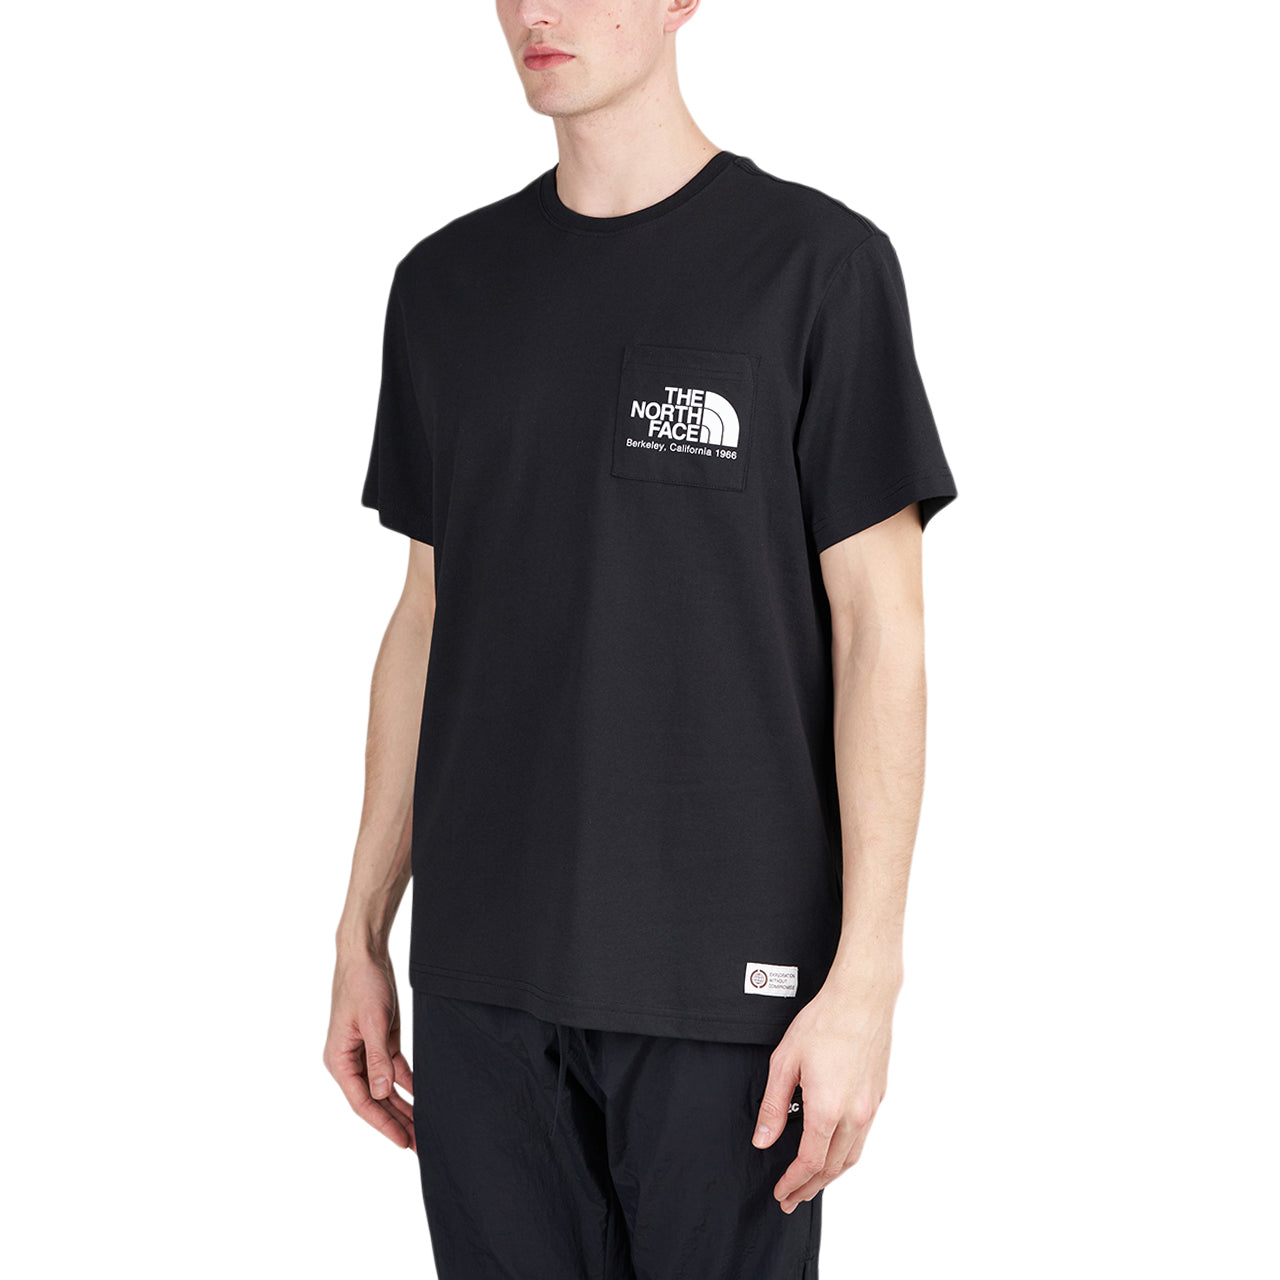 The North Face Berkeley California T-Shirt (Black) NF0A55GDJK31